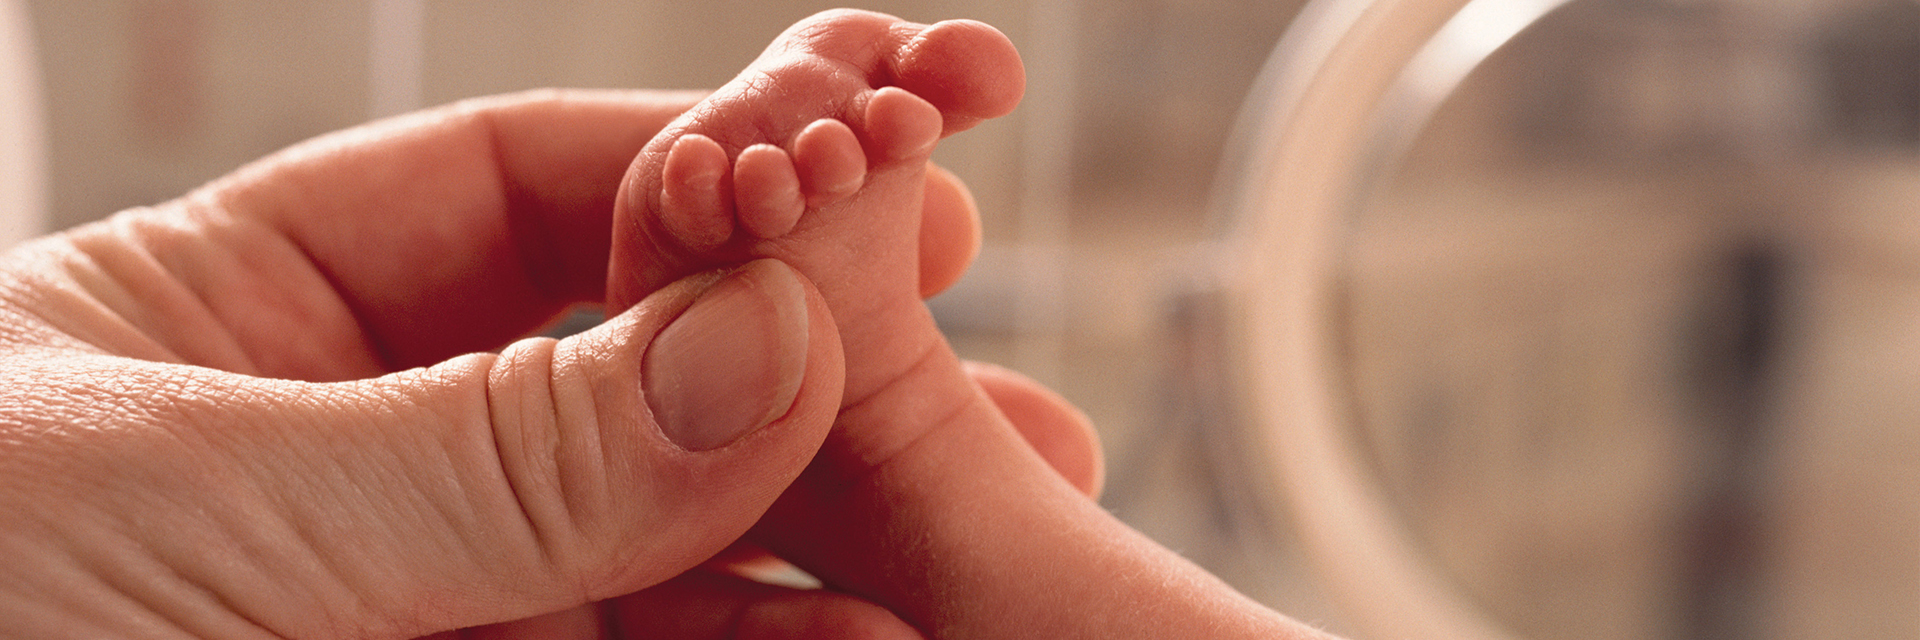 Hand holding newborn foot